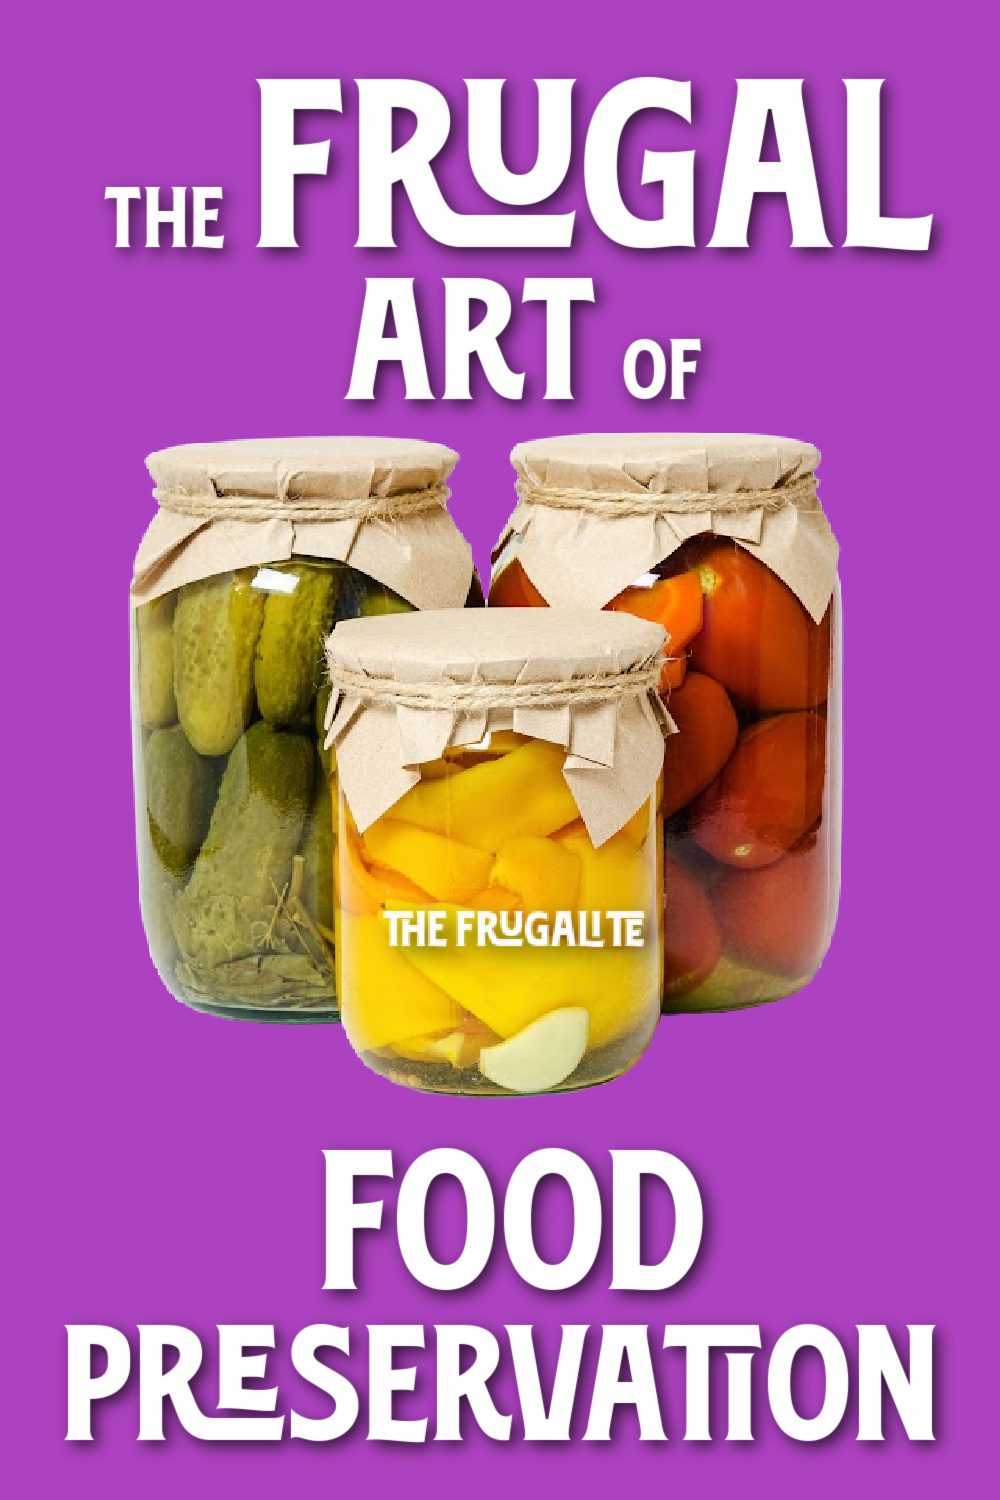 The Frugal Art of Food Preservation